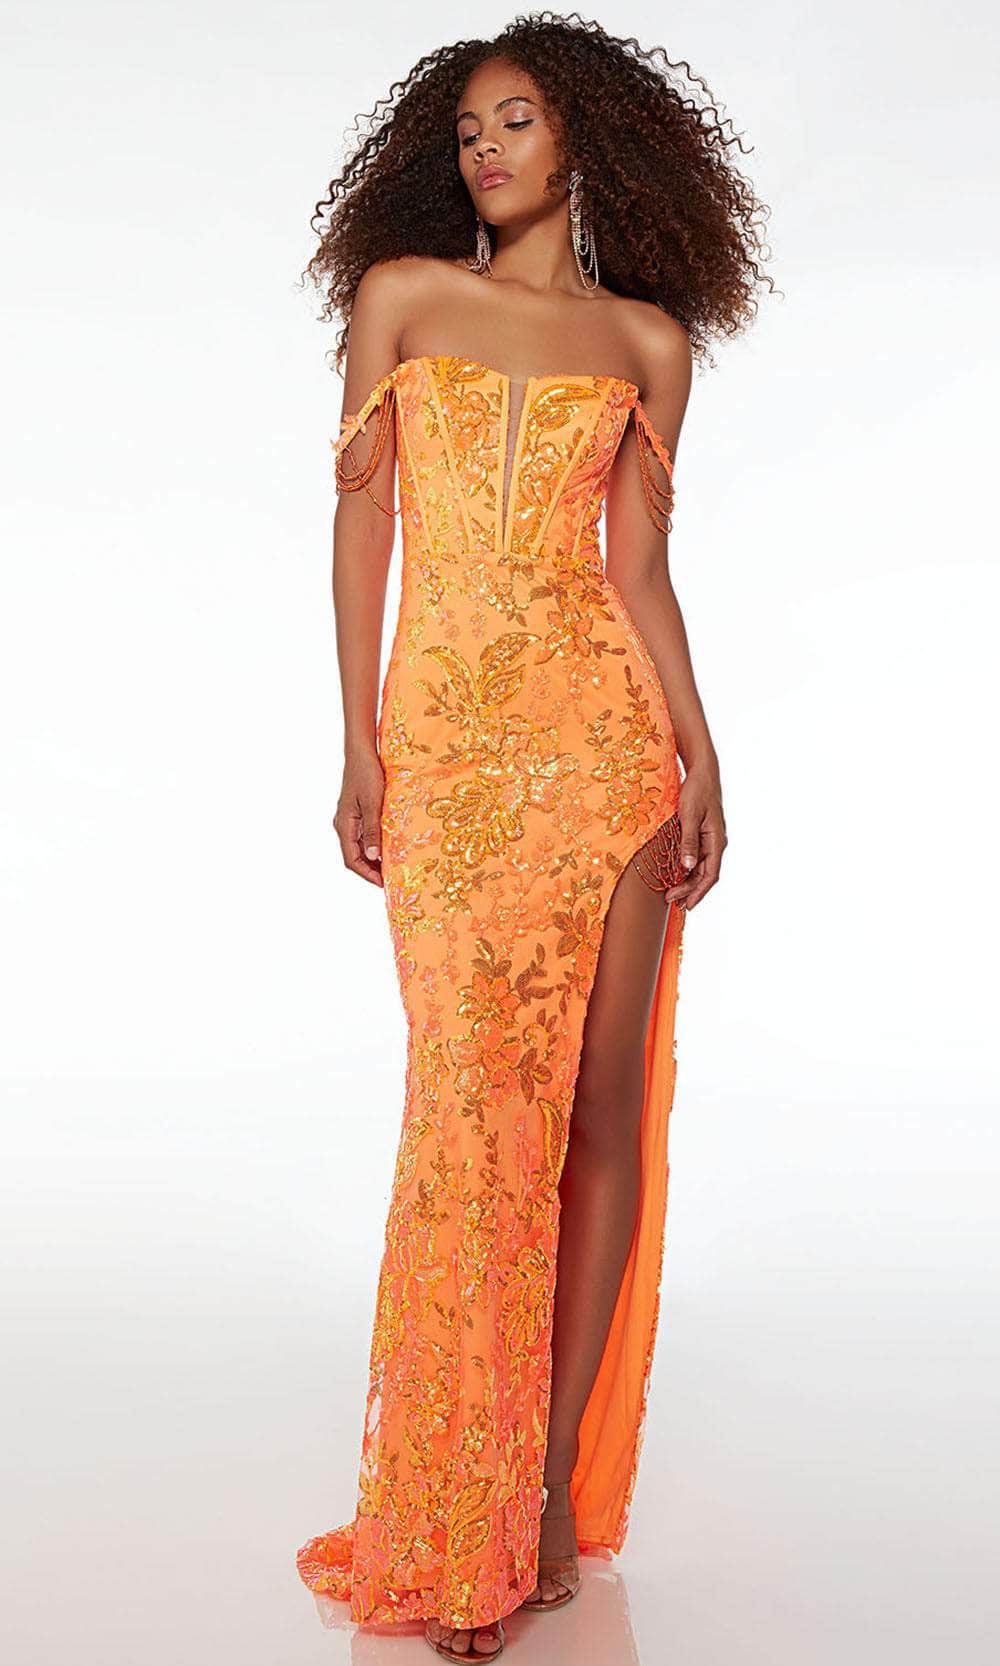 Alyce Paris 61550 - Sequin Embellished Strapless Dress Special Occasion Dress 000 / Bright Orange